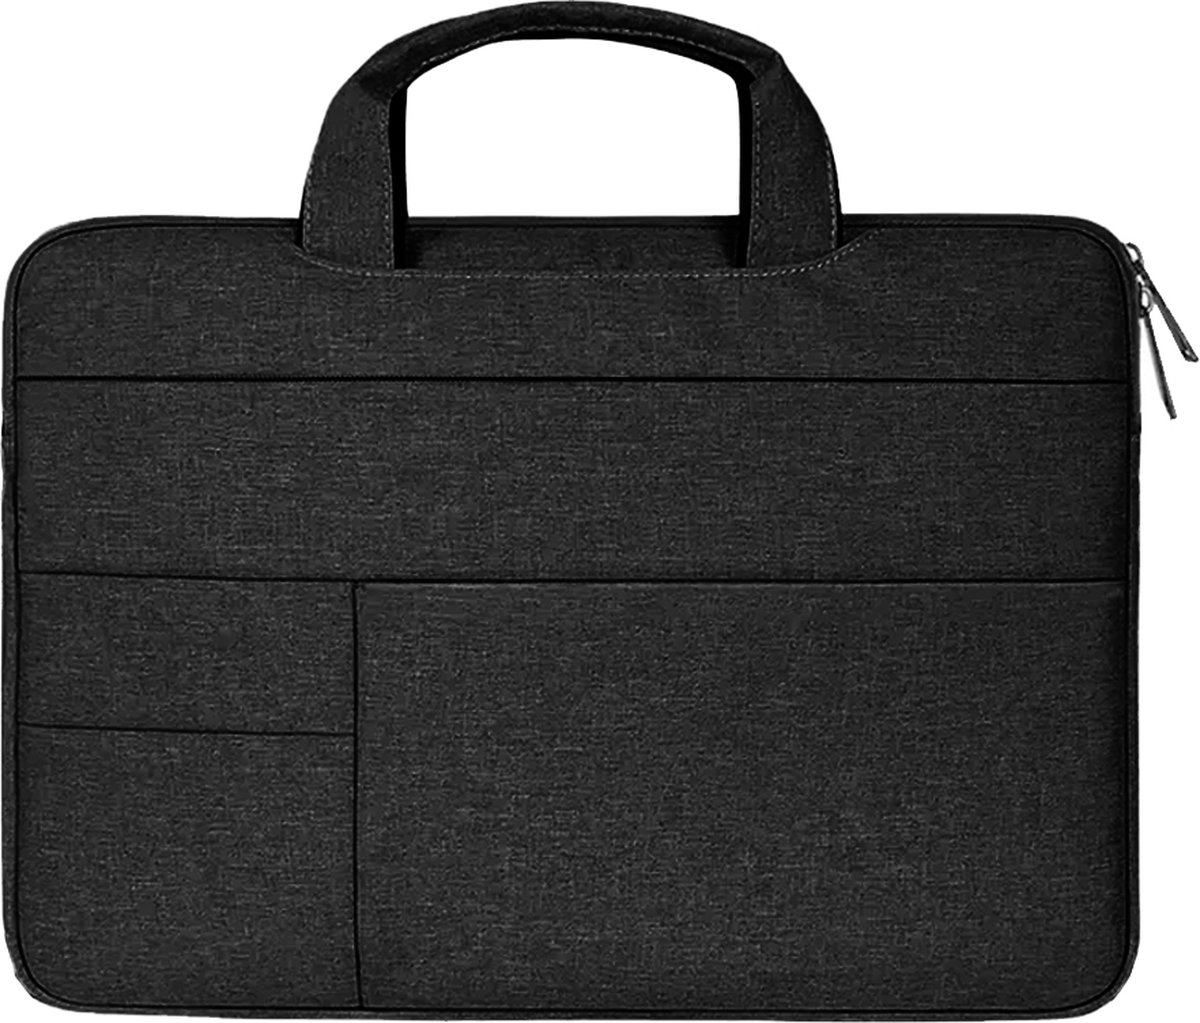 Case2go - Laptophoes geschikt voor Medion Akoya - Laptoptas 13 inch / 13.3 inch - Spatwaterdicht - Met Handvat - Zwart